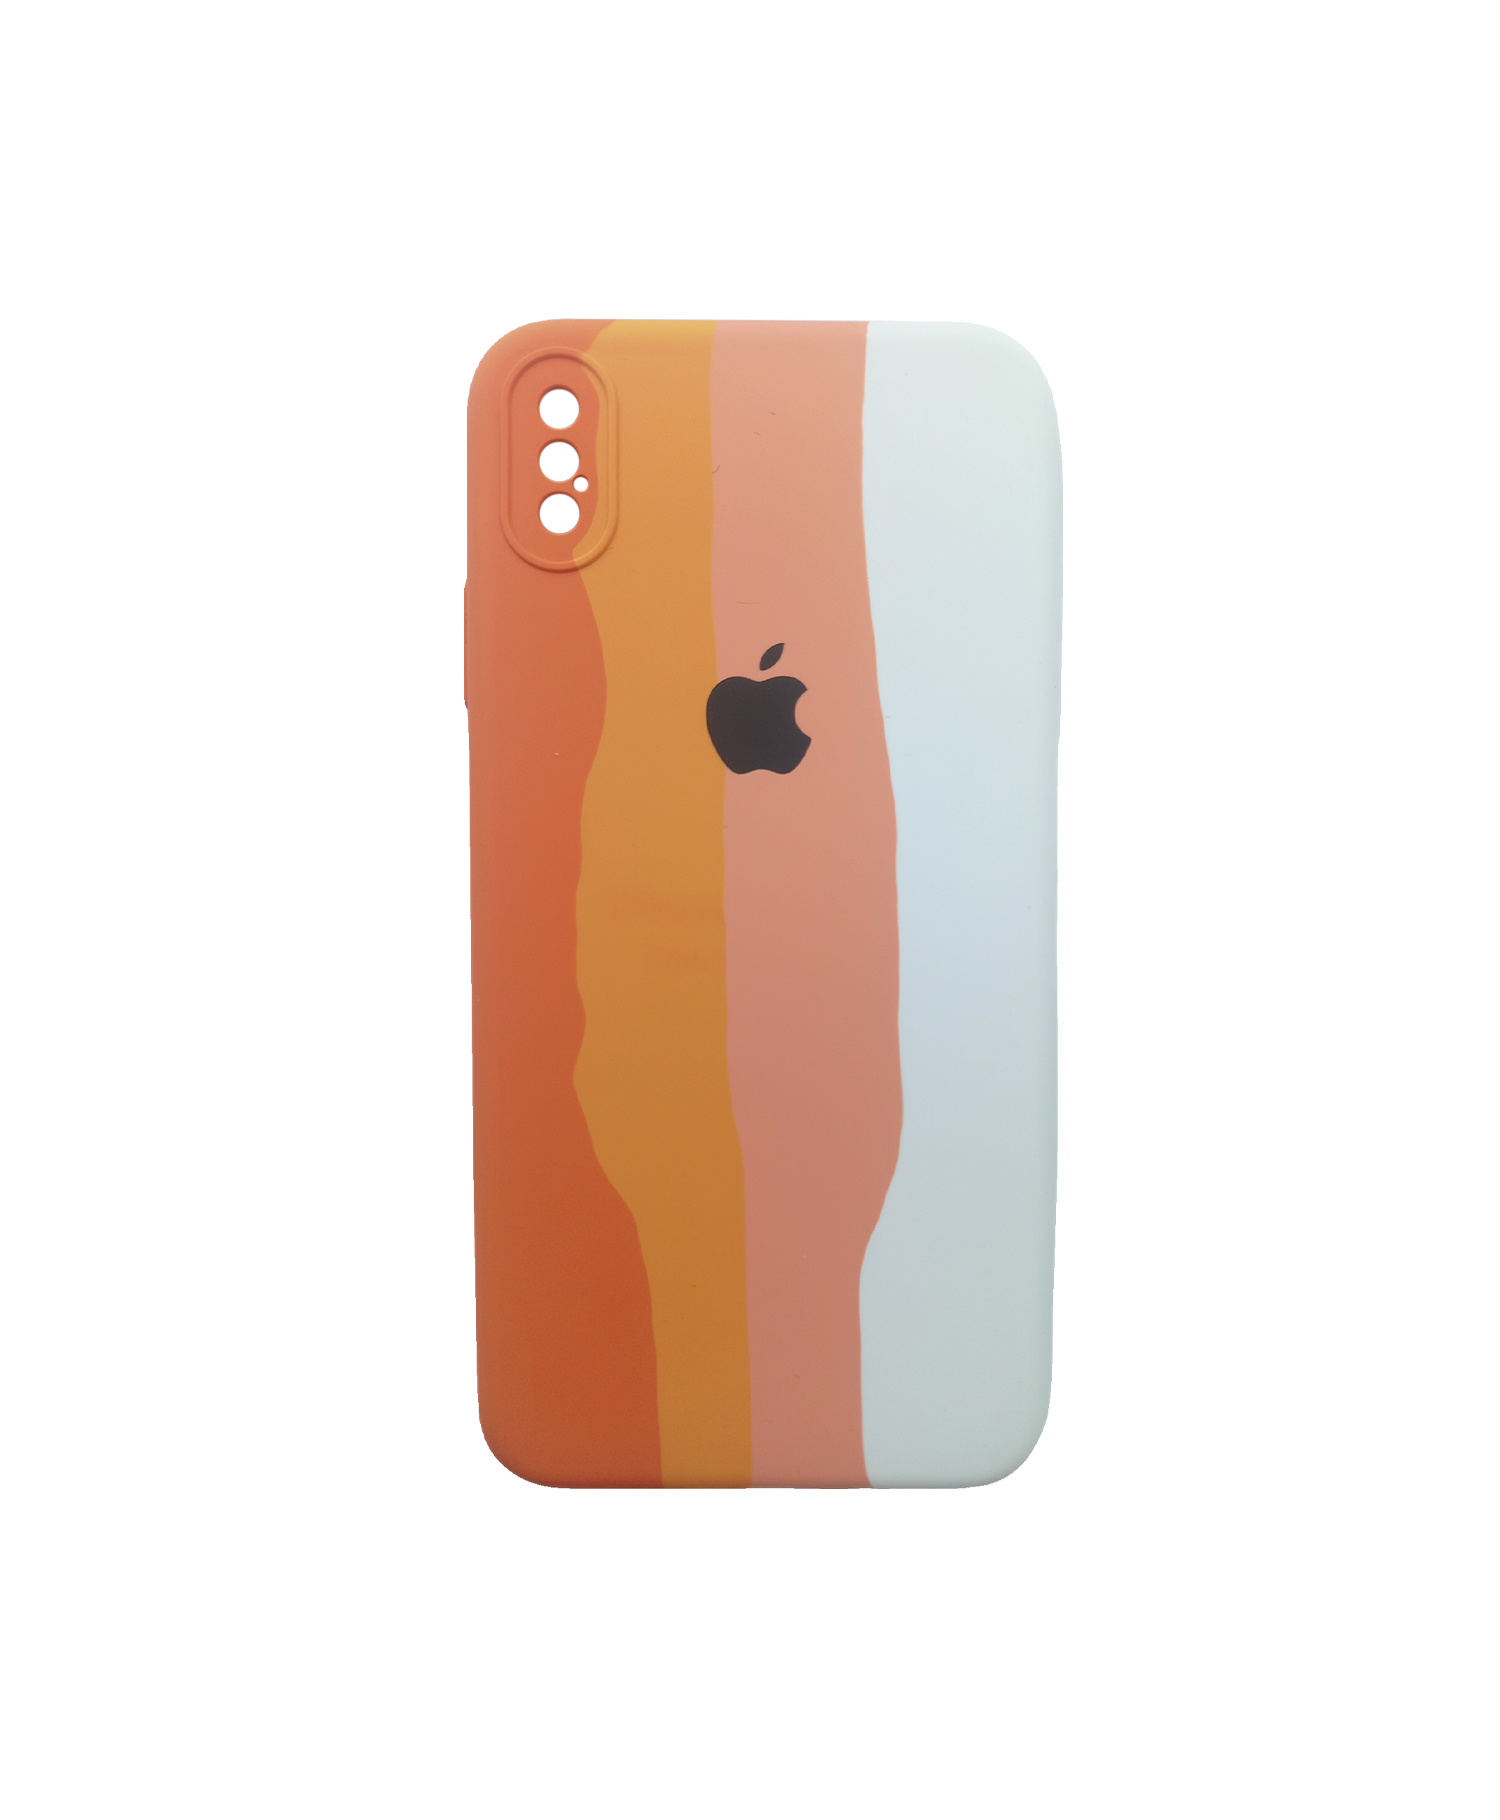 قاب سیلیکونی رنگین کمانی اورجینال Iphone XS Max